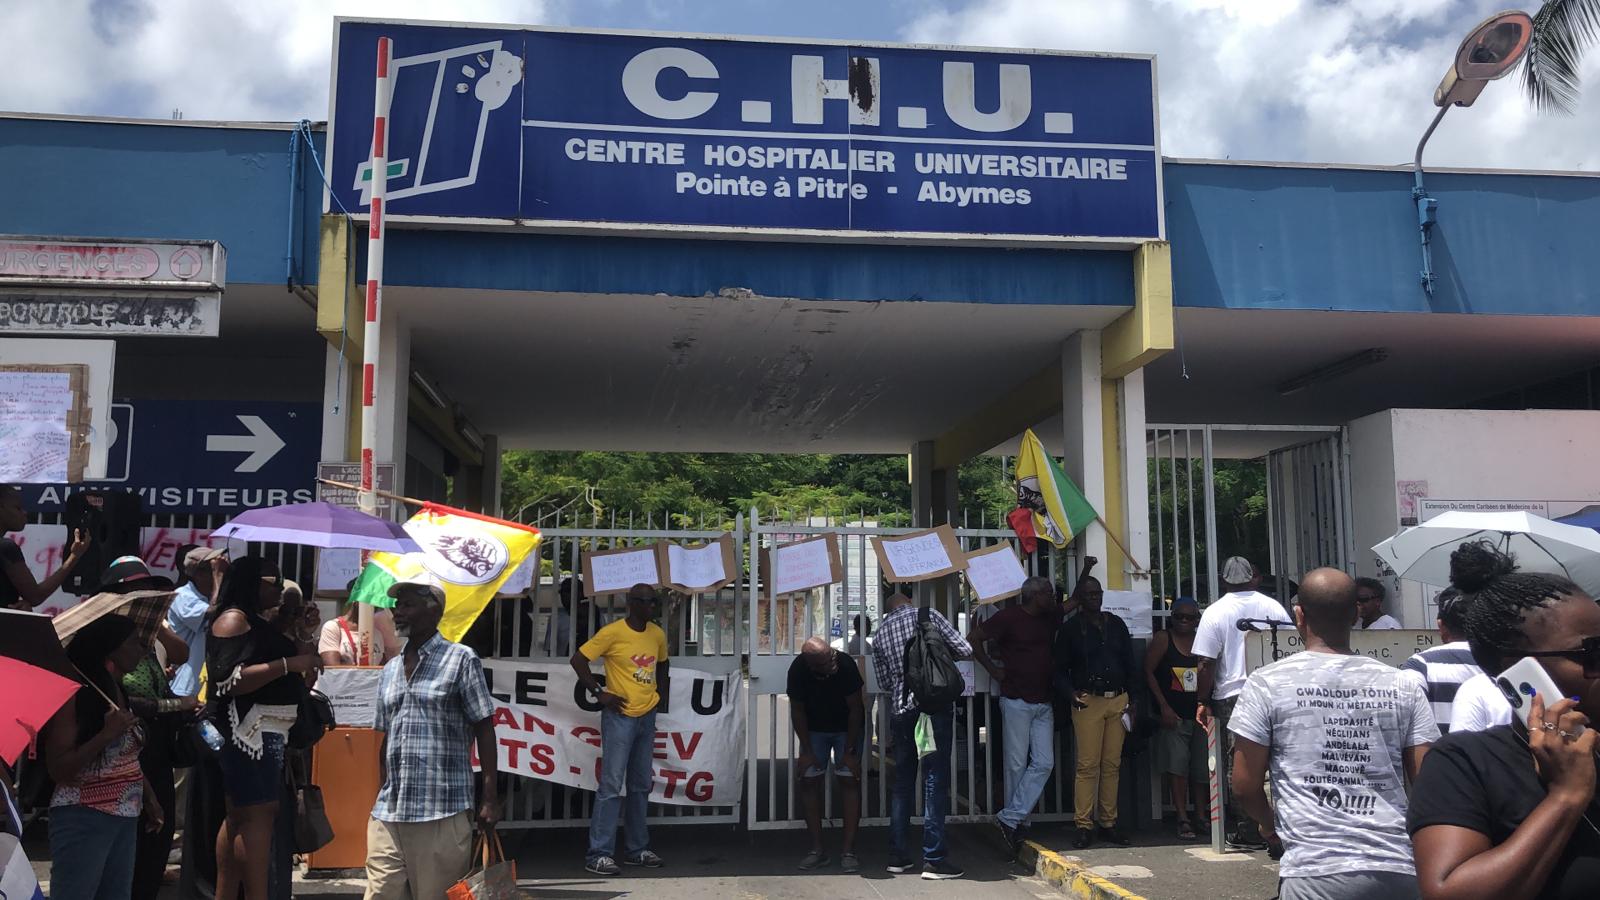     Grève générale au CHU ce mardi (vidéo)

